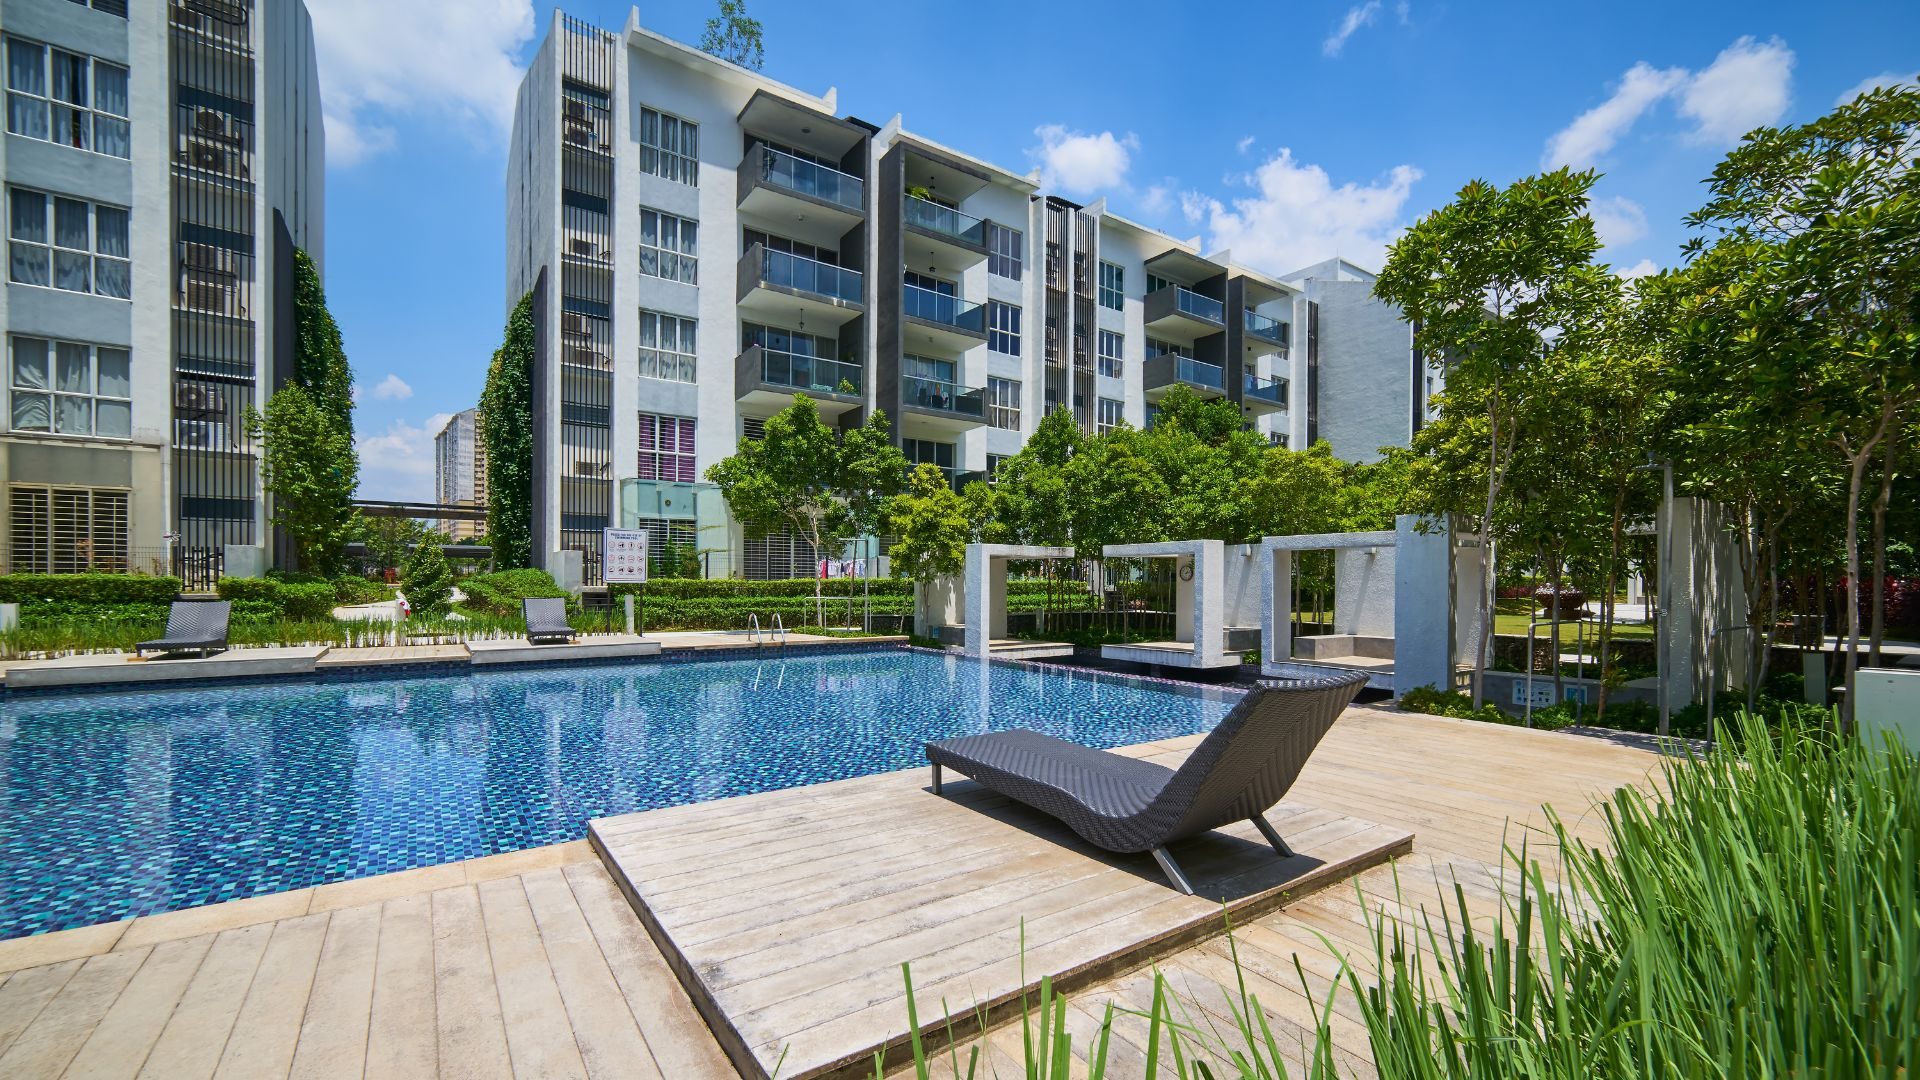 Apartment amenities and beautiful pool